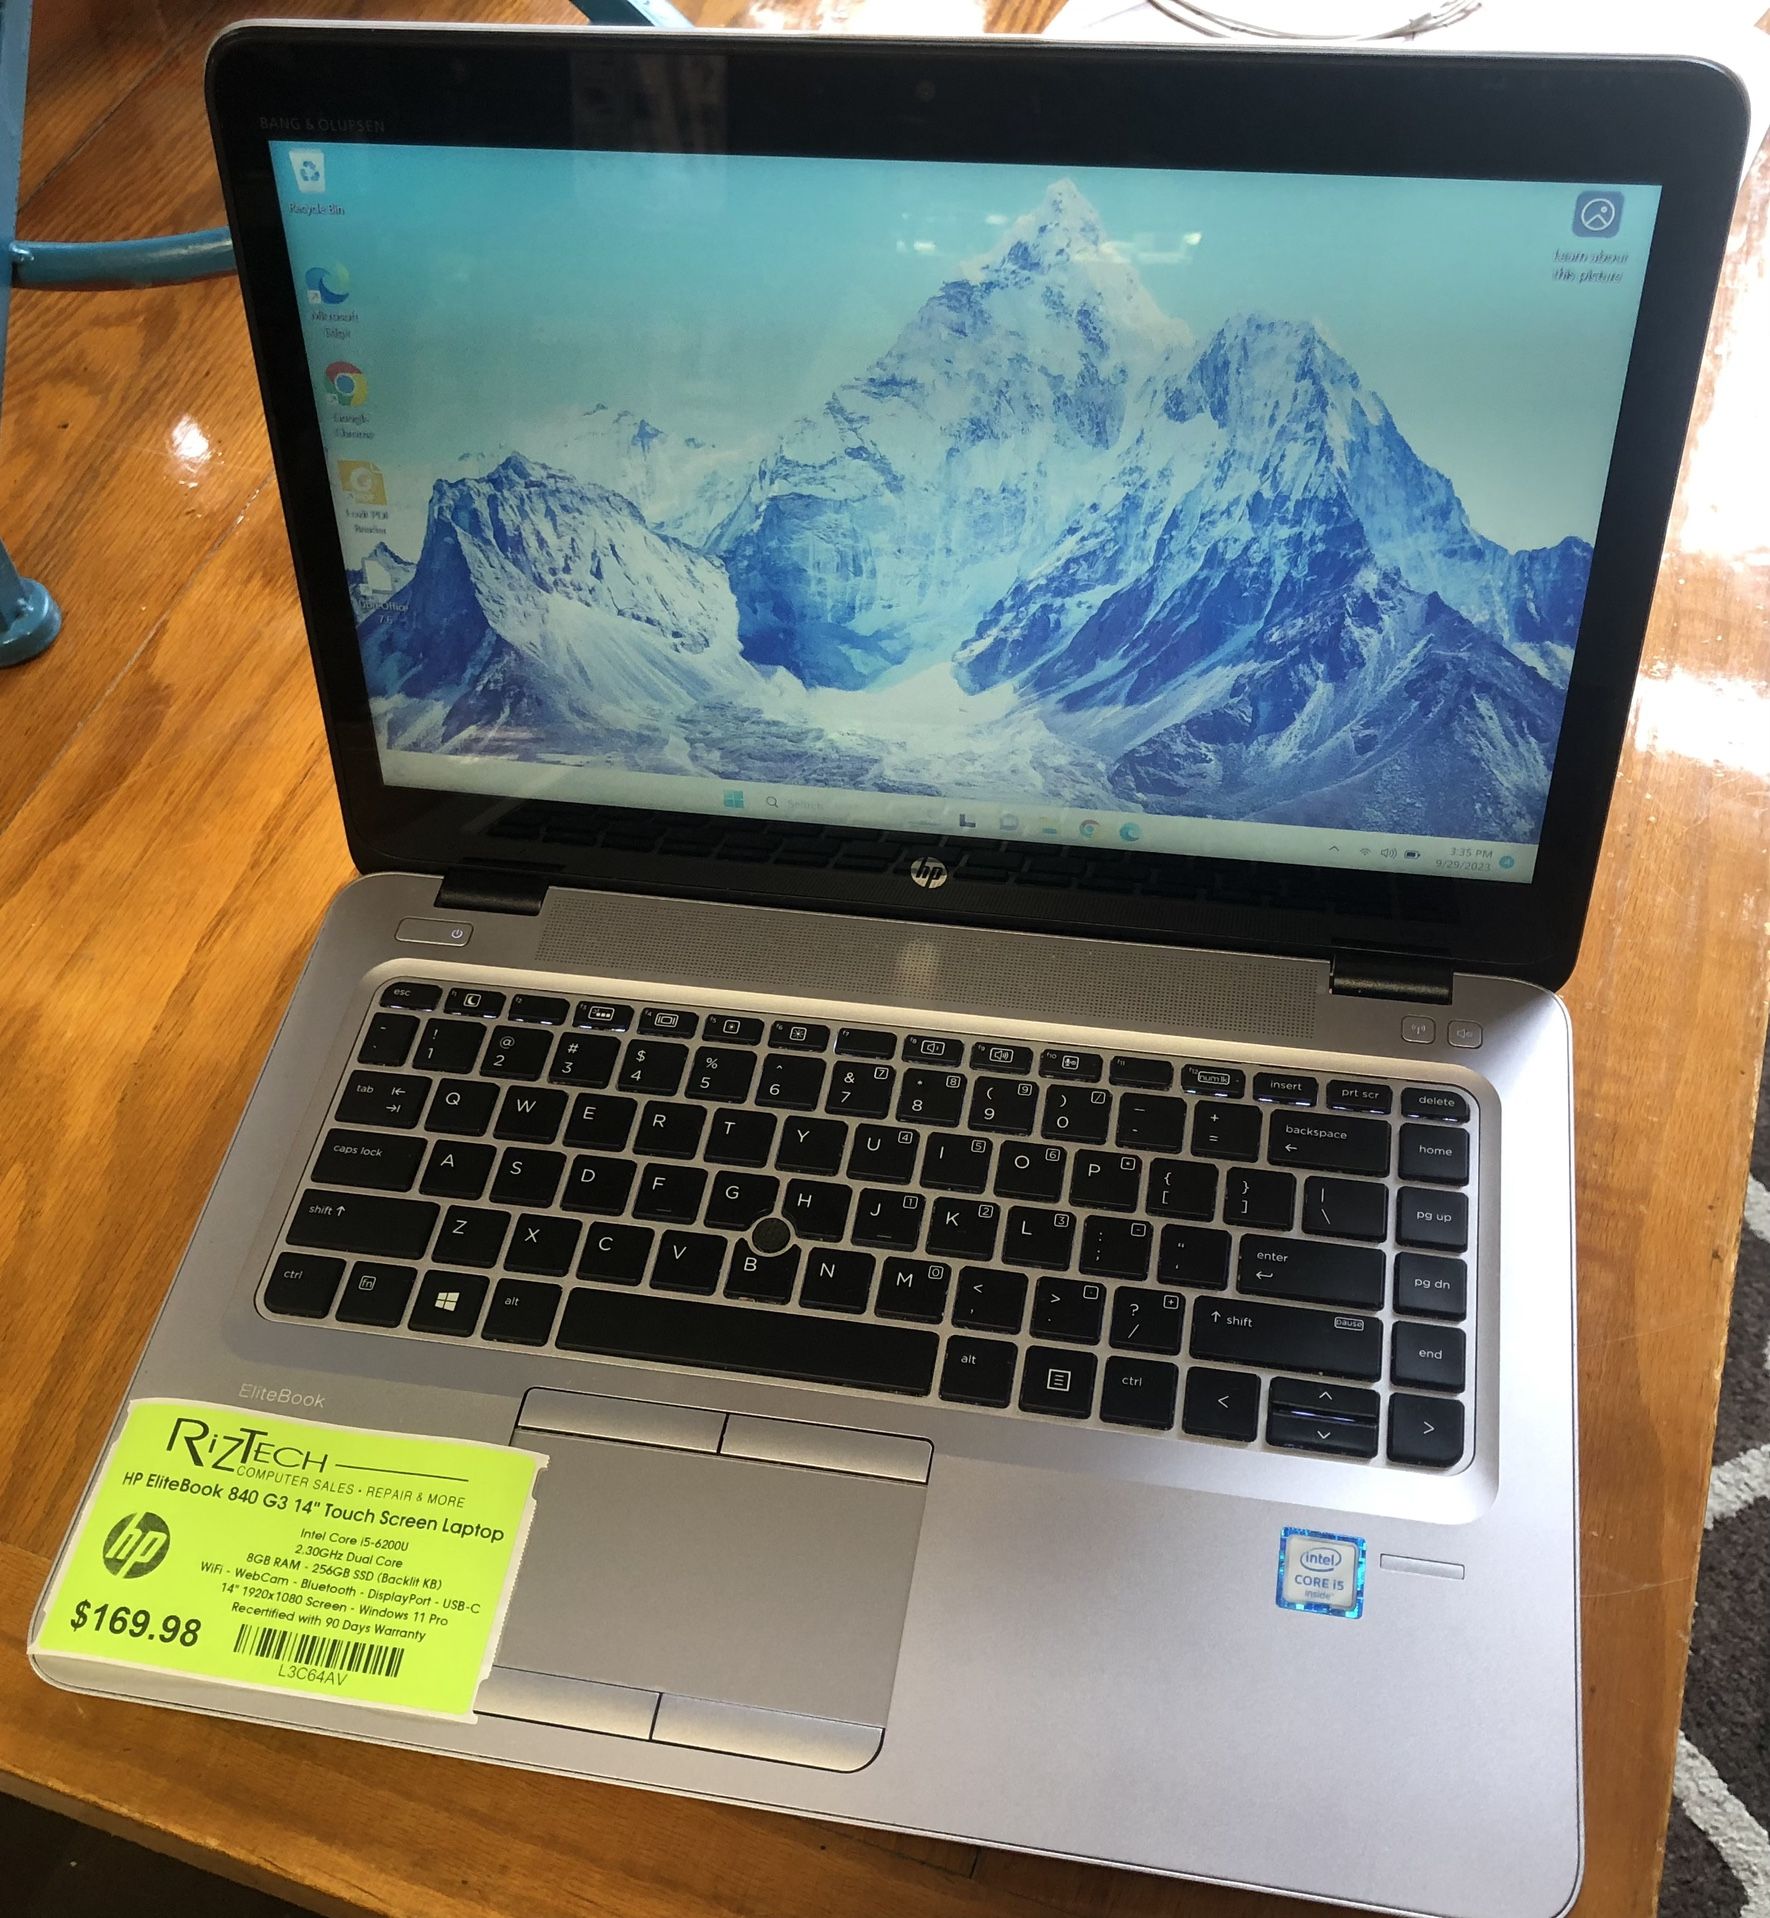 HP EliteBook 840 G3 14" Touch Screen Laptop